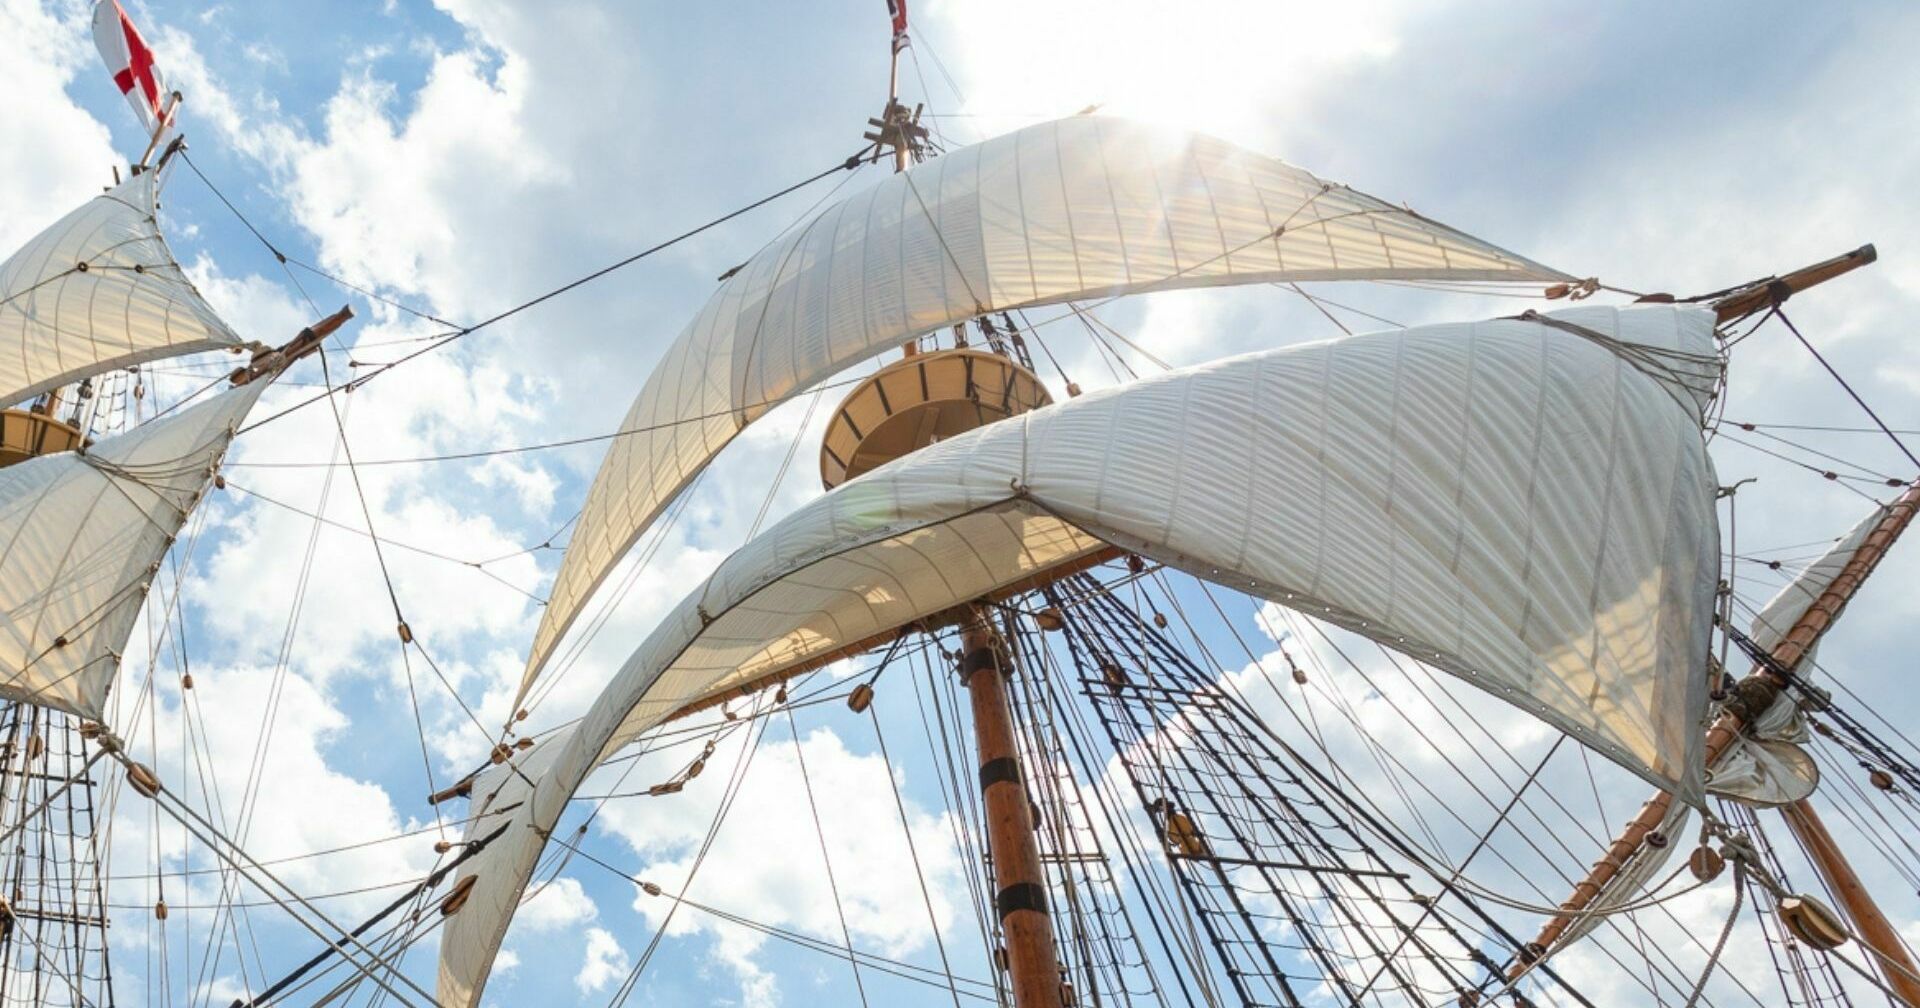 Mayflower sail as seen from below